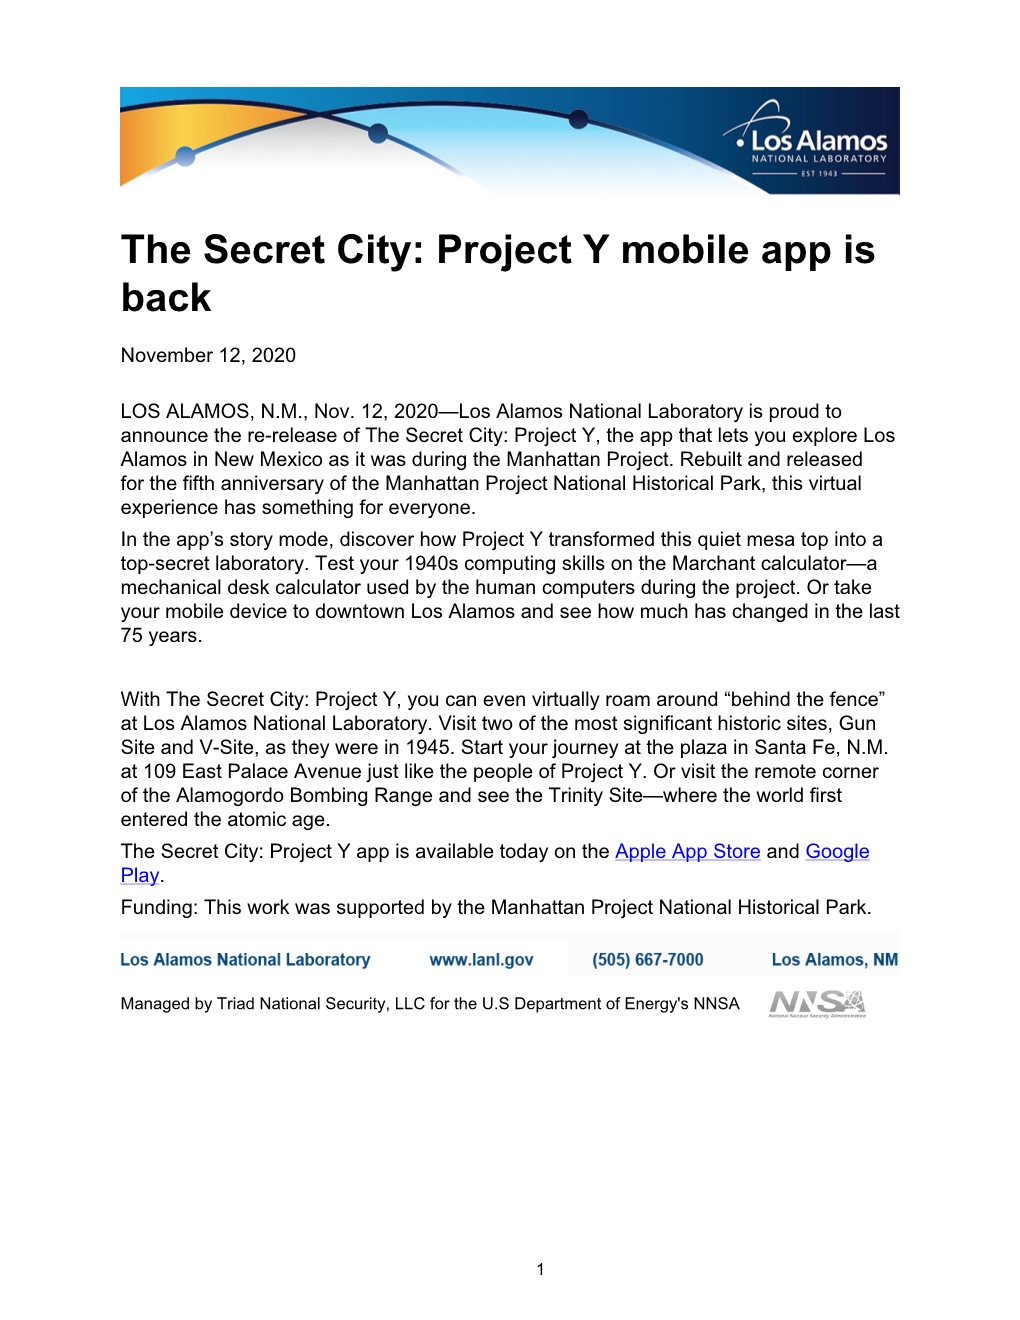 The Secret City: Project Y Mobile App Is Back